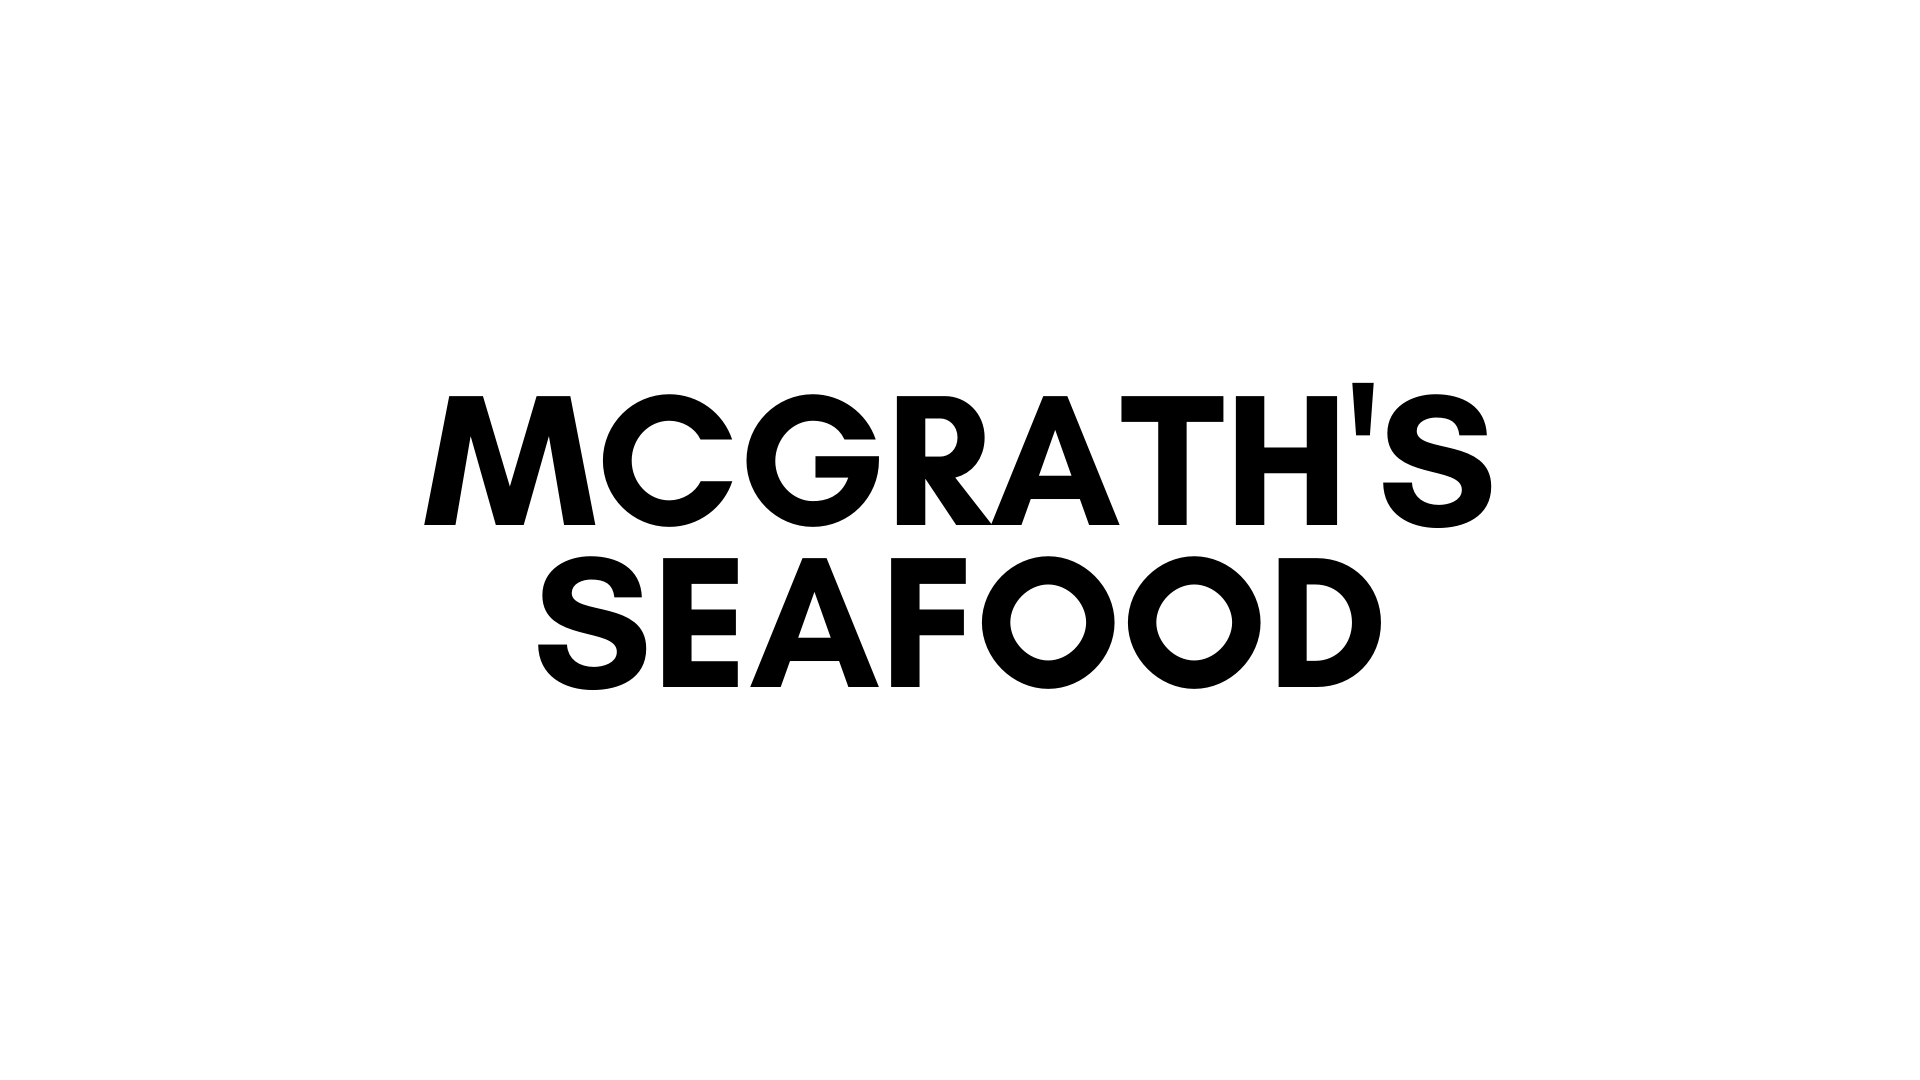 MCGRATH'S SEAFOOD